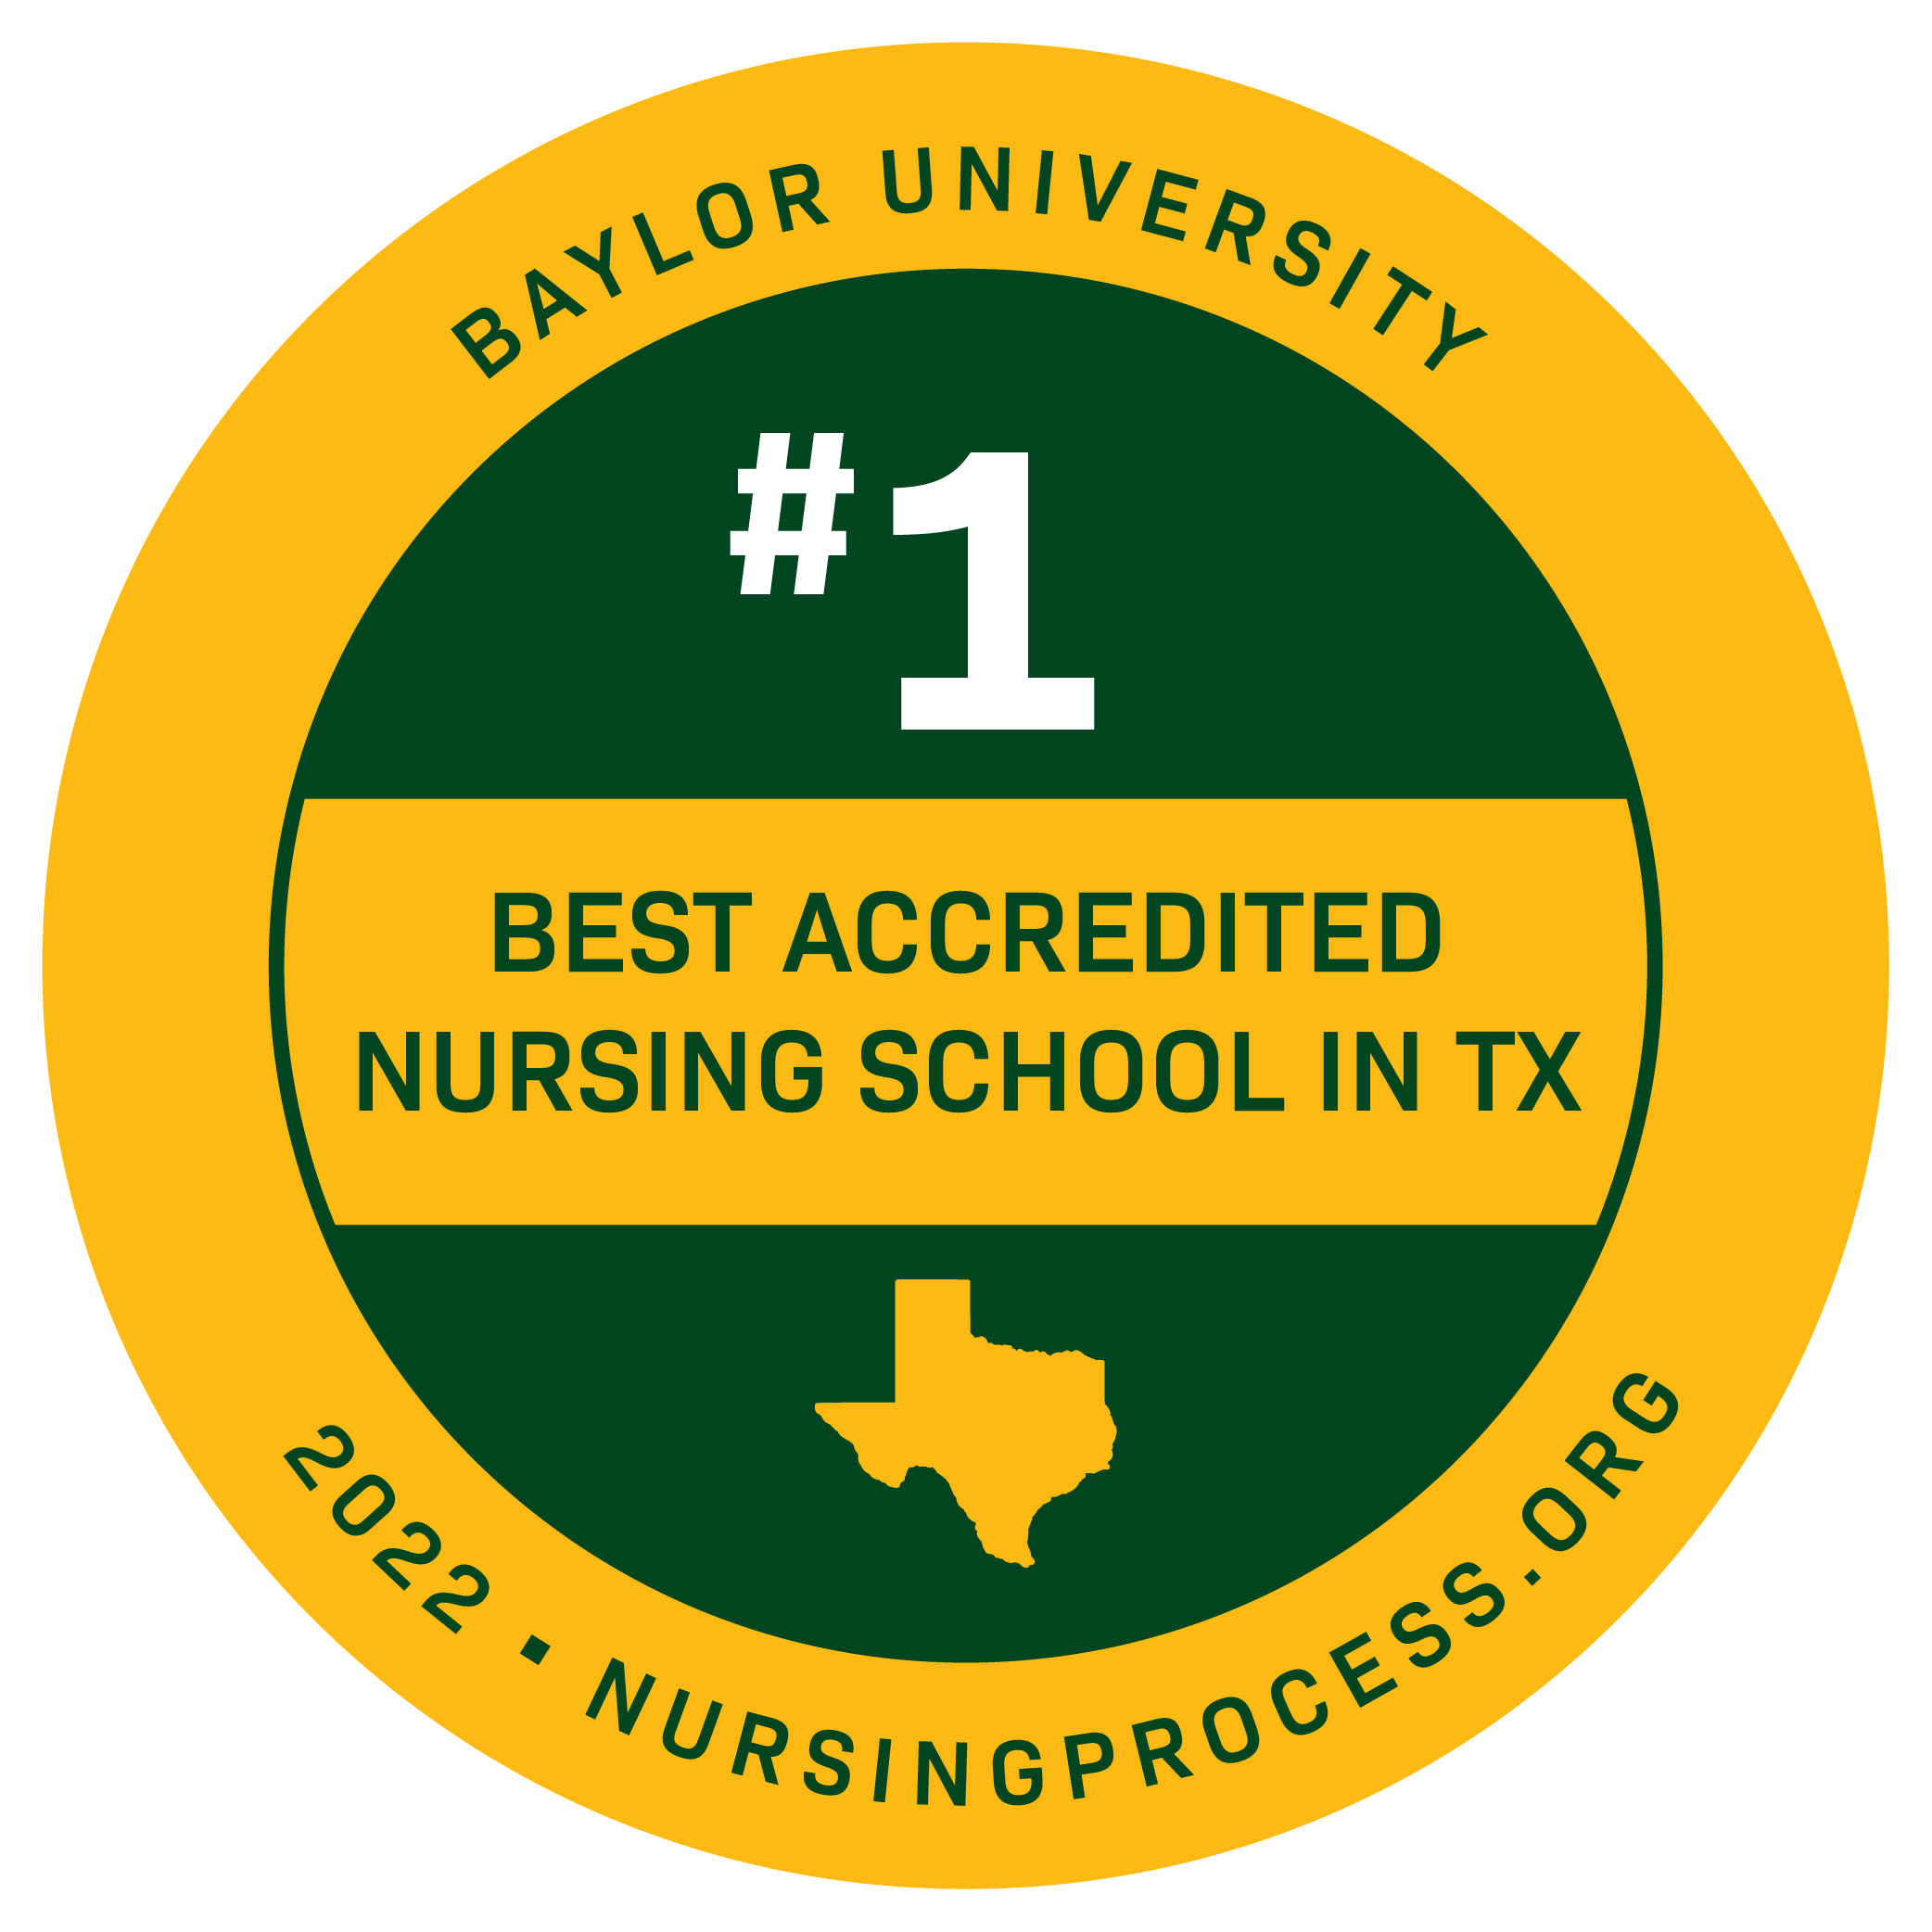 #1 best accredited nursing school in TX